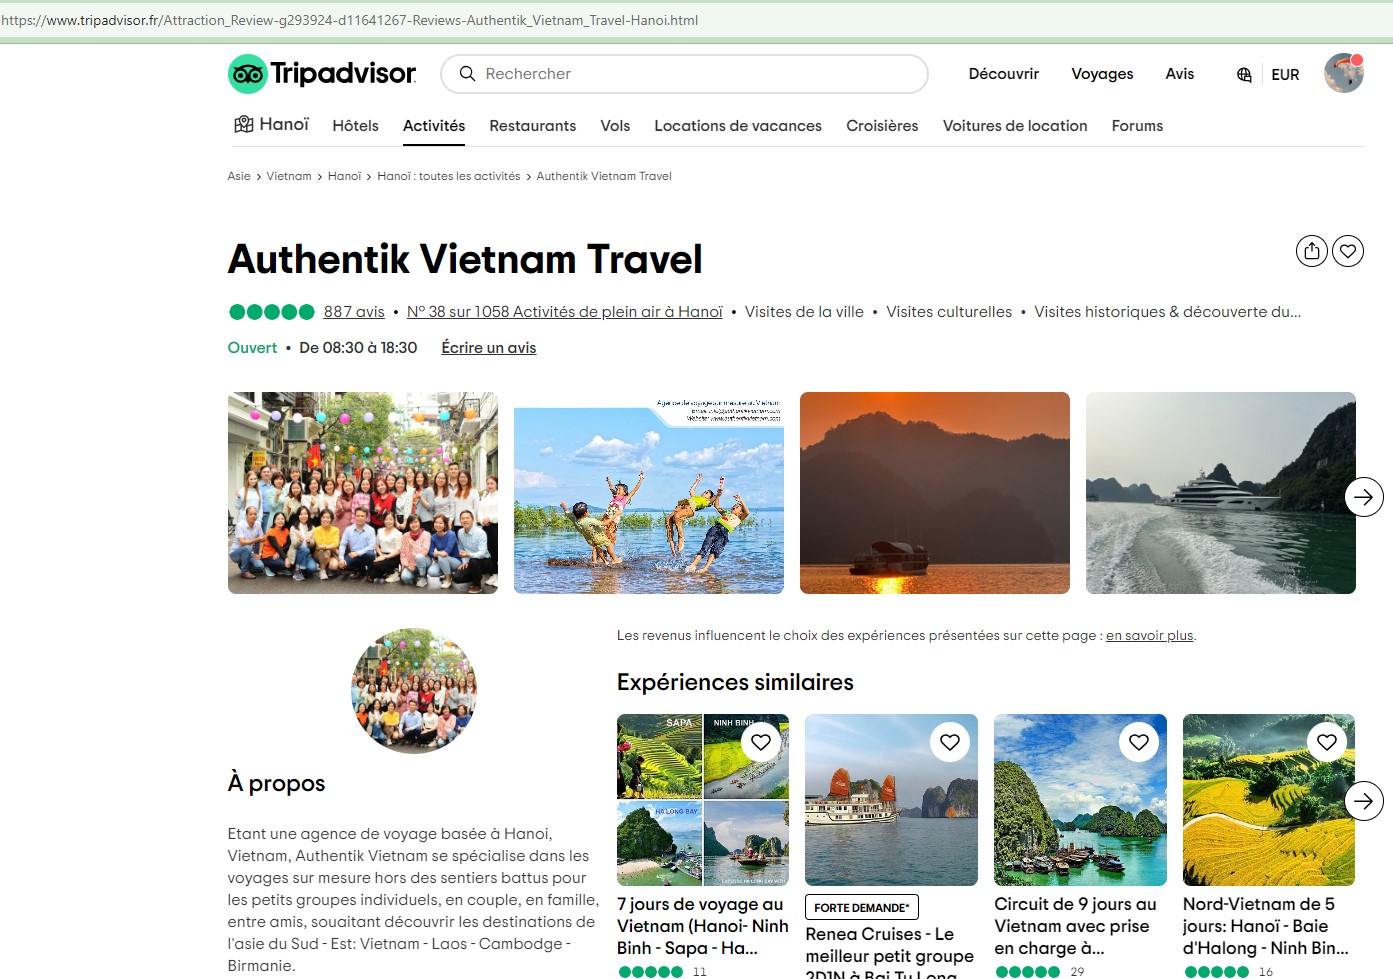 Authentik Vietnam sur Tripadvisor